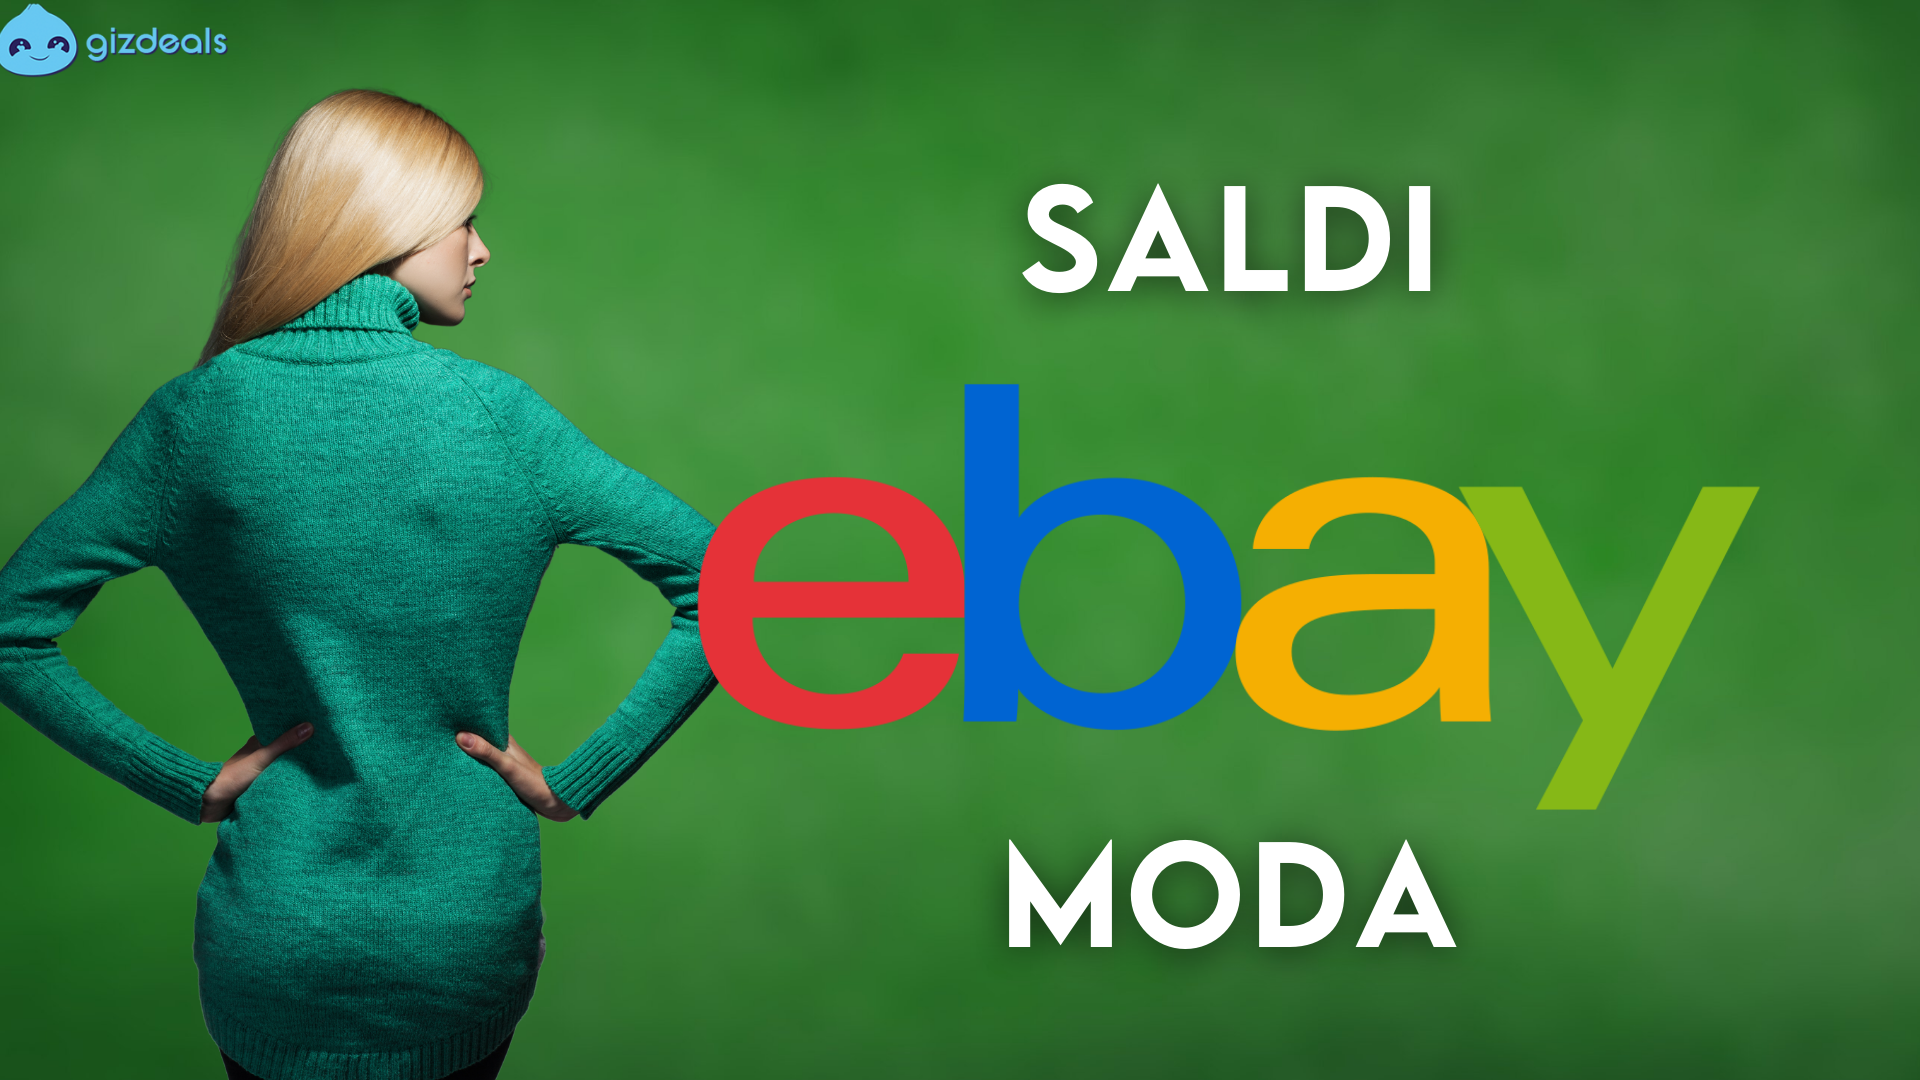 saldi ebay moda coupon